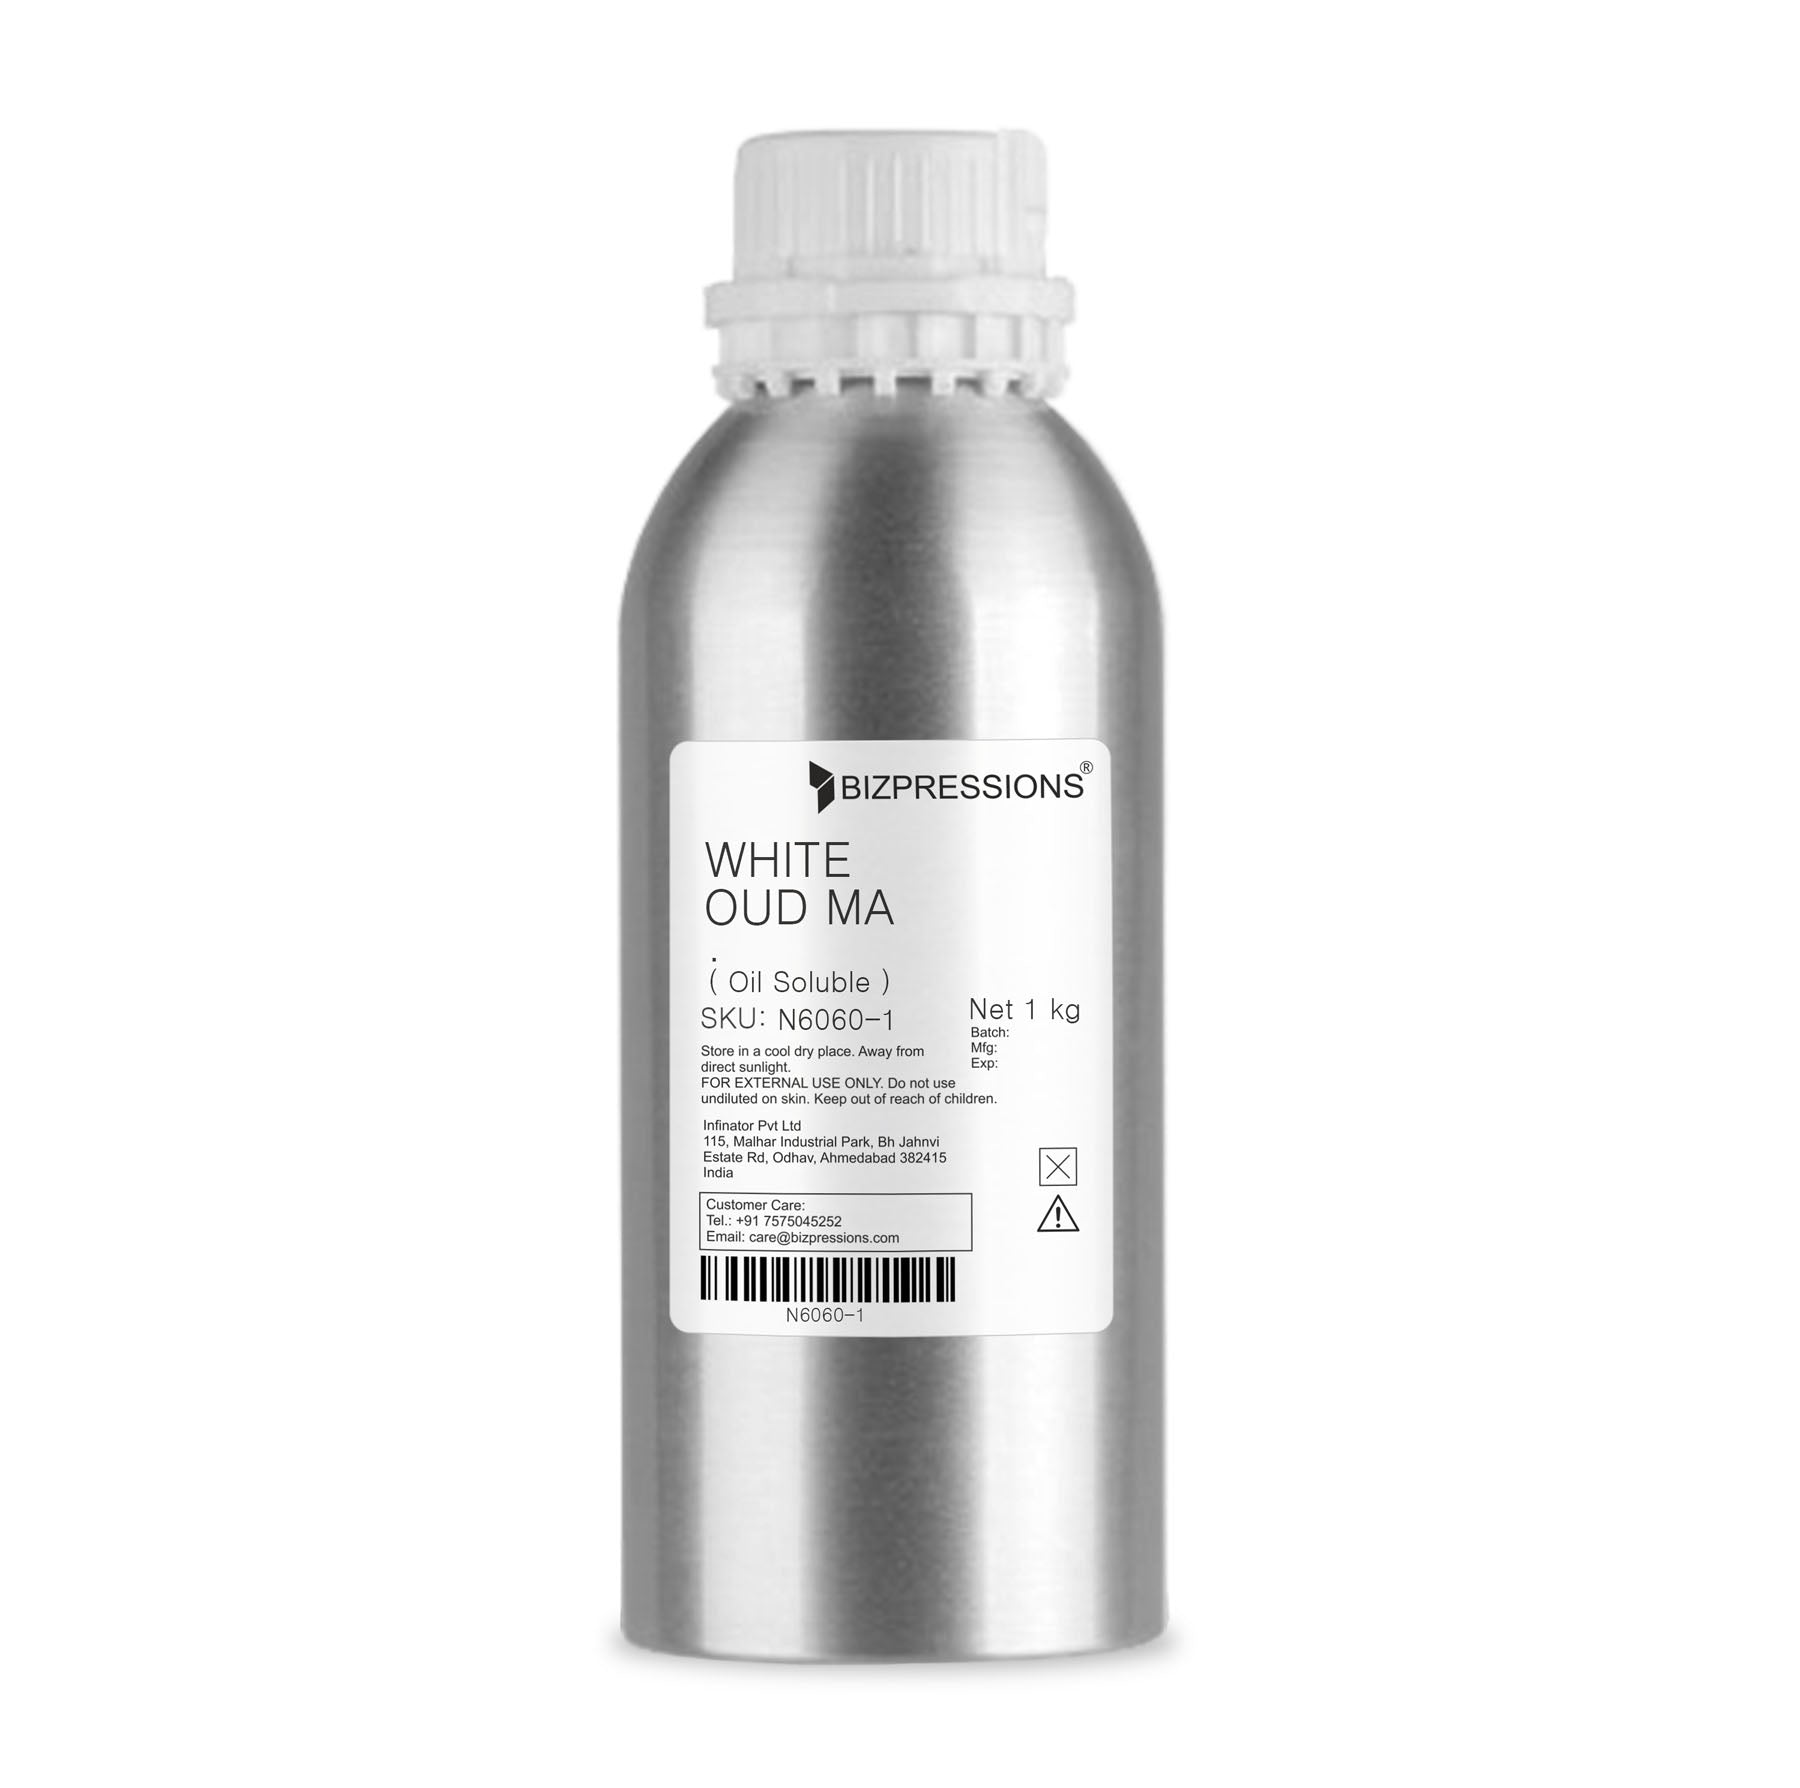 WHITE OUD MA - Fragrance ( Oil Soluble ) - 1 kg